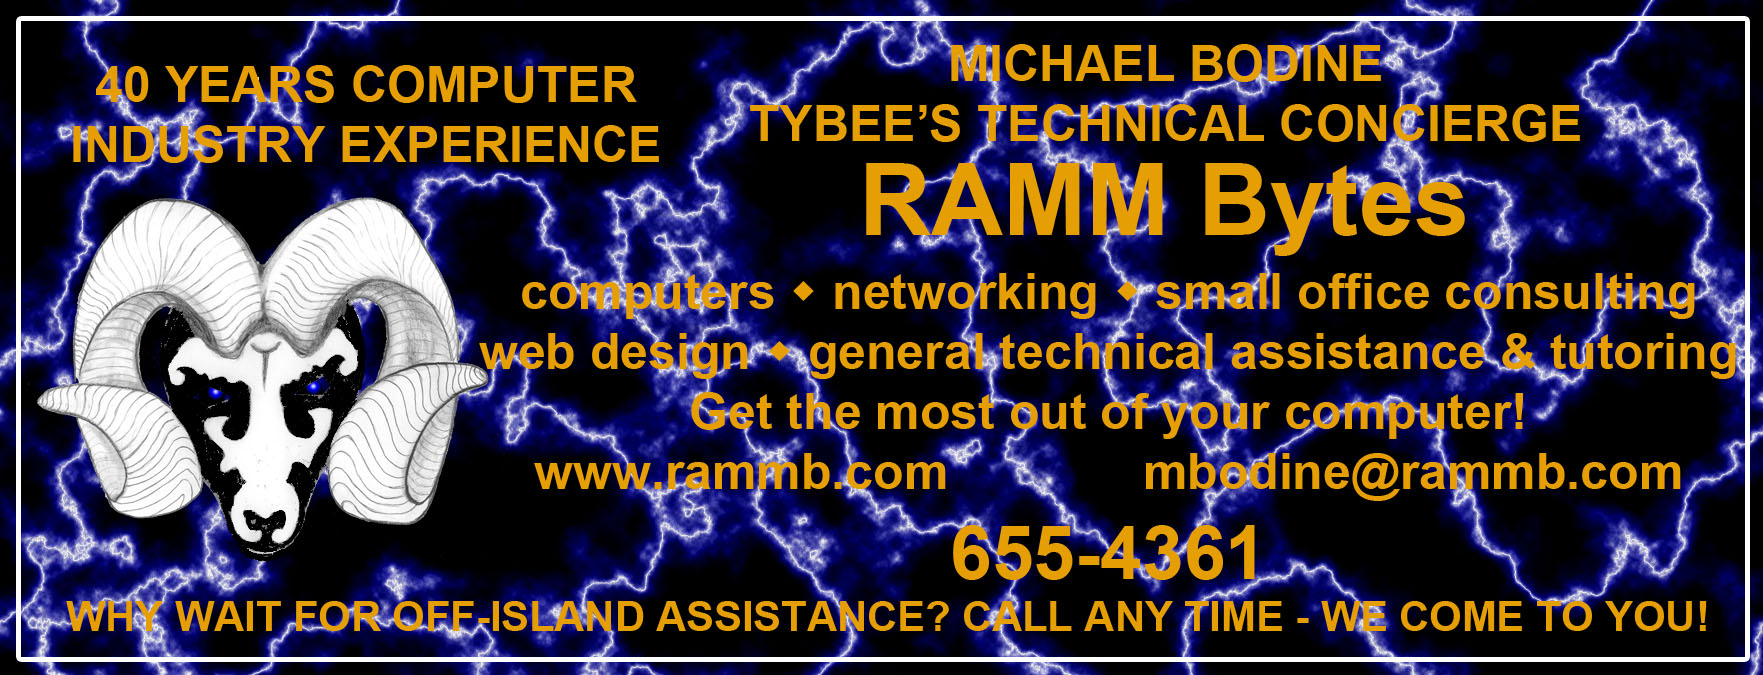 RAMM Bytes logo